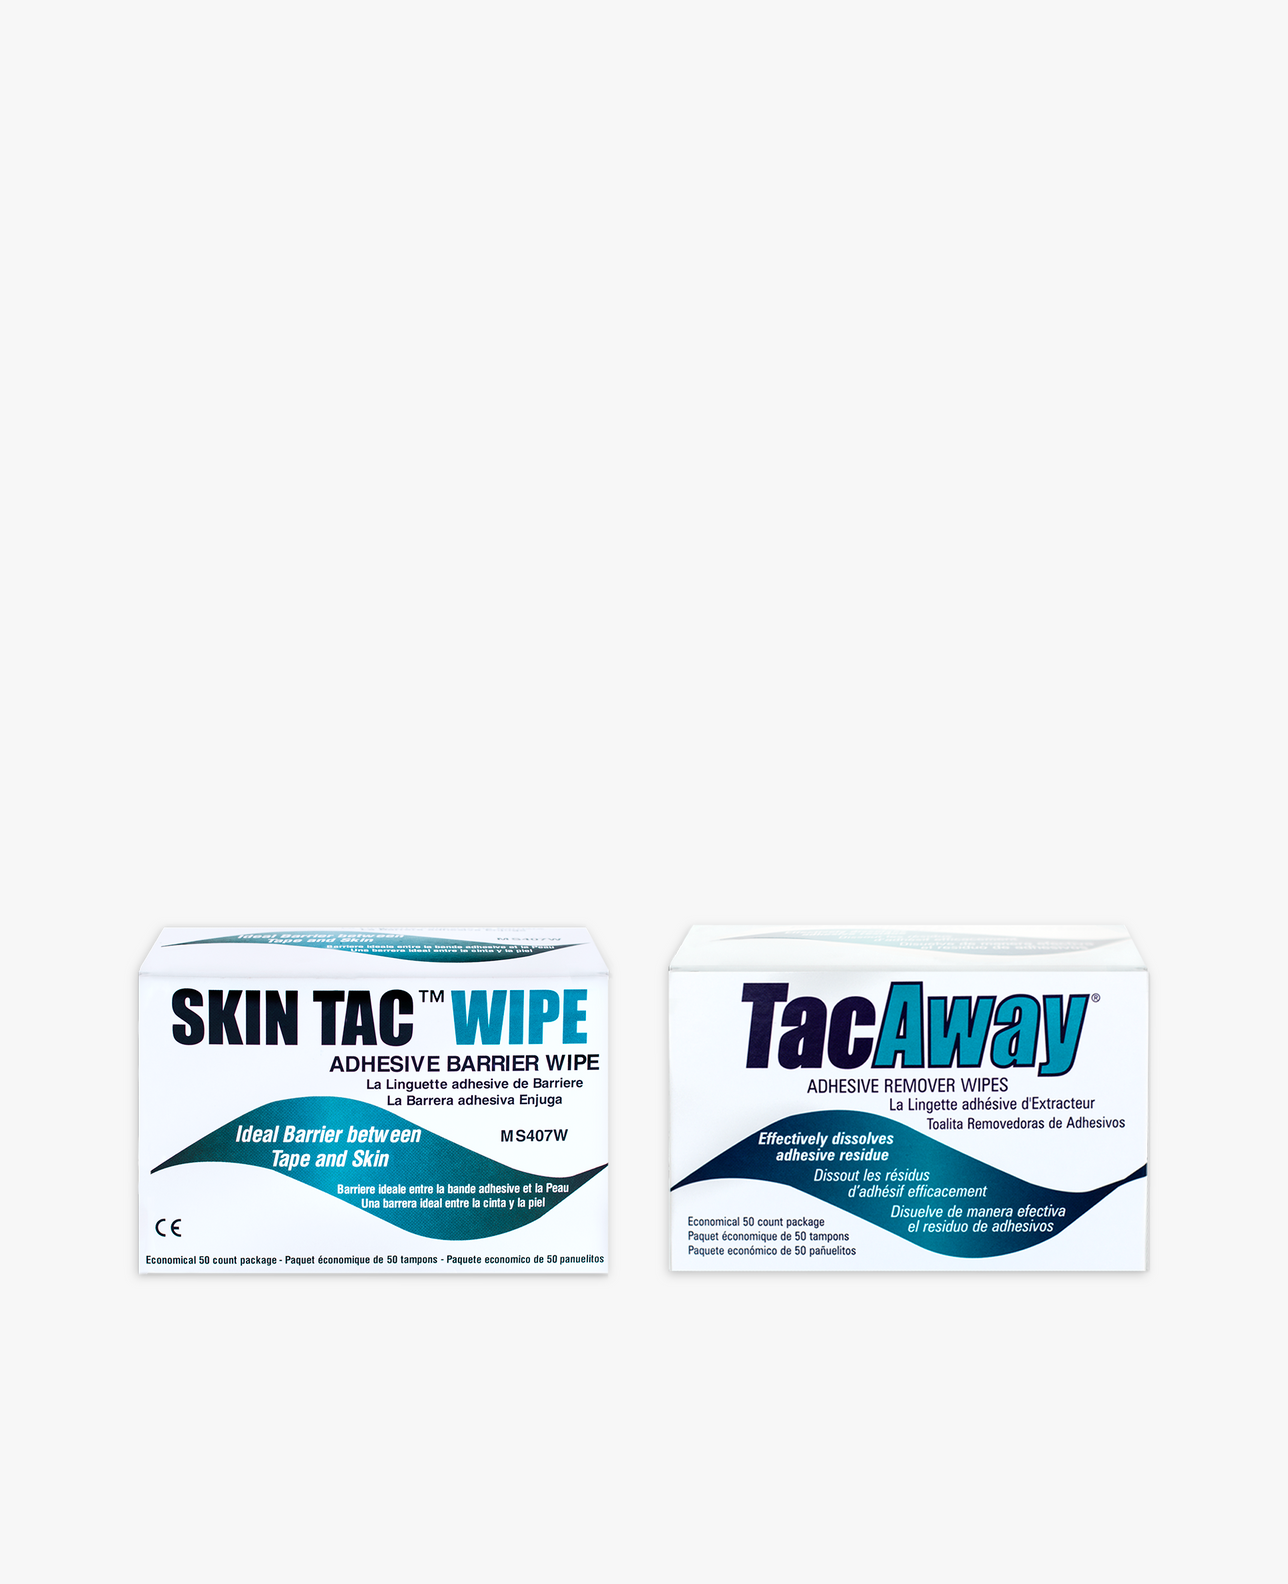 Skin Tac Wipes Skin Barrier (Box of 50), Torbot # MS407W